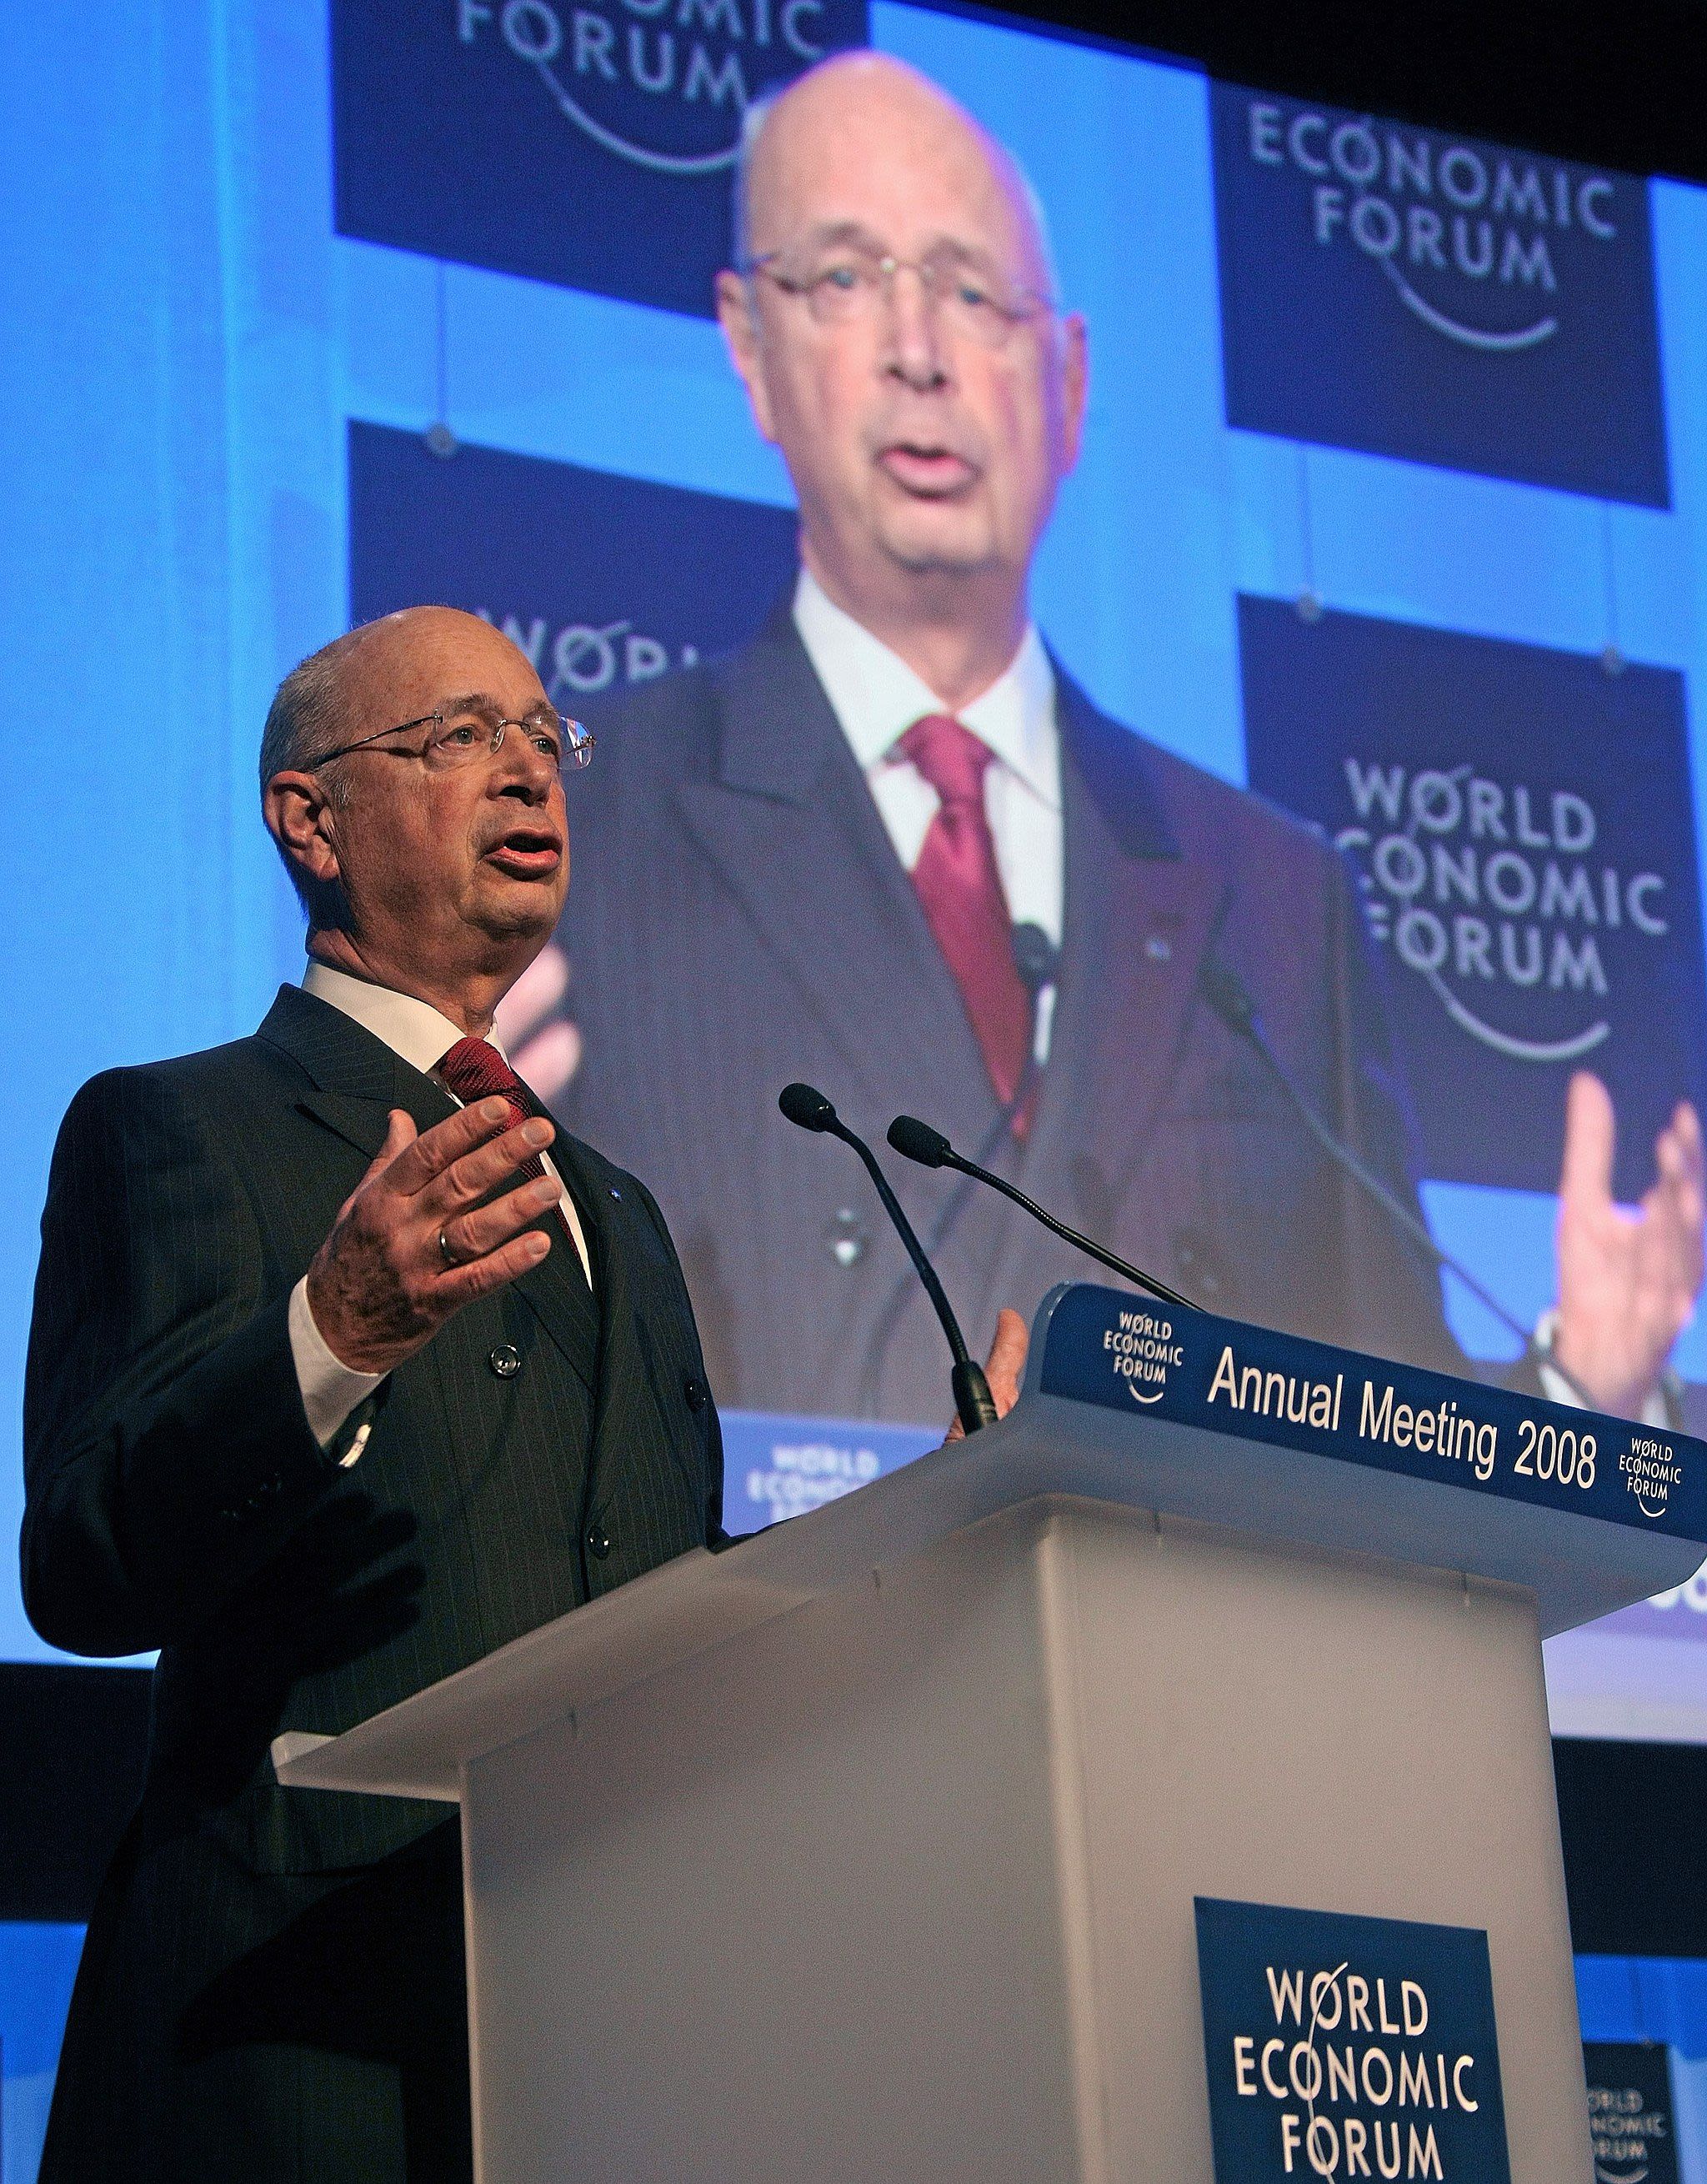 World Economic Forum founder Klaus Schwab steps back from executive post